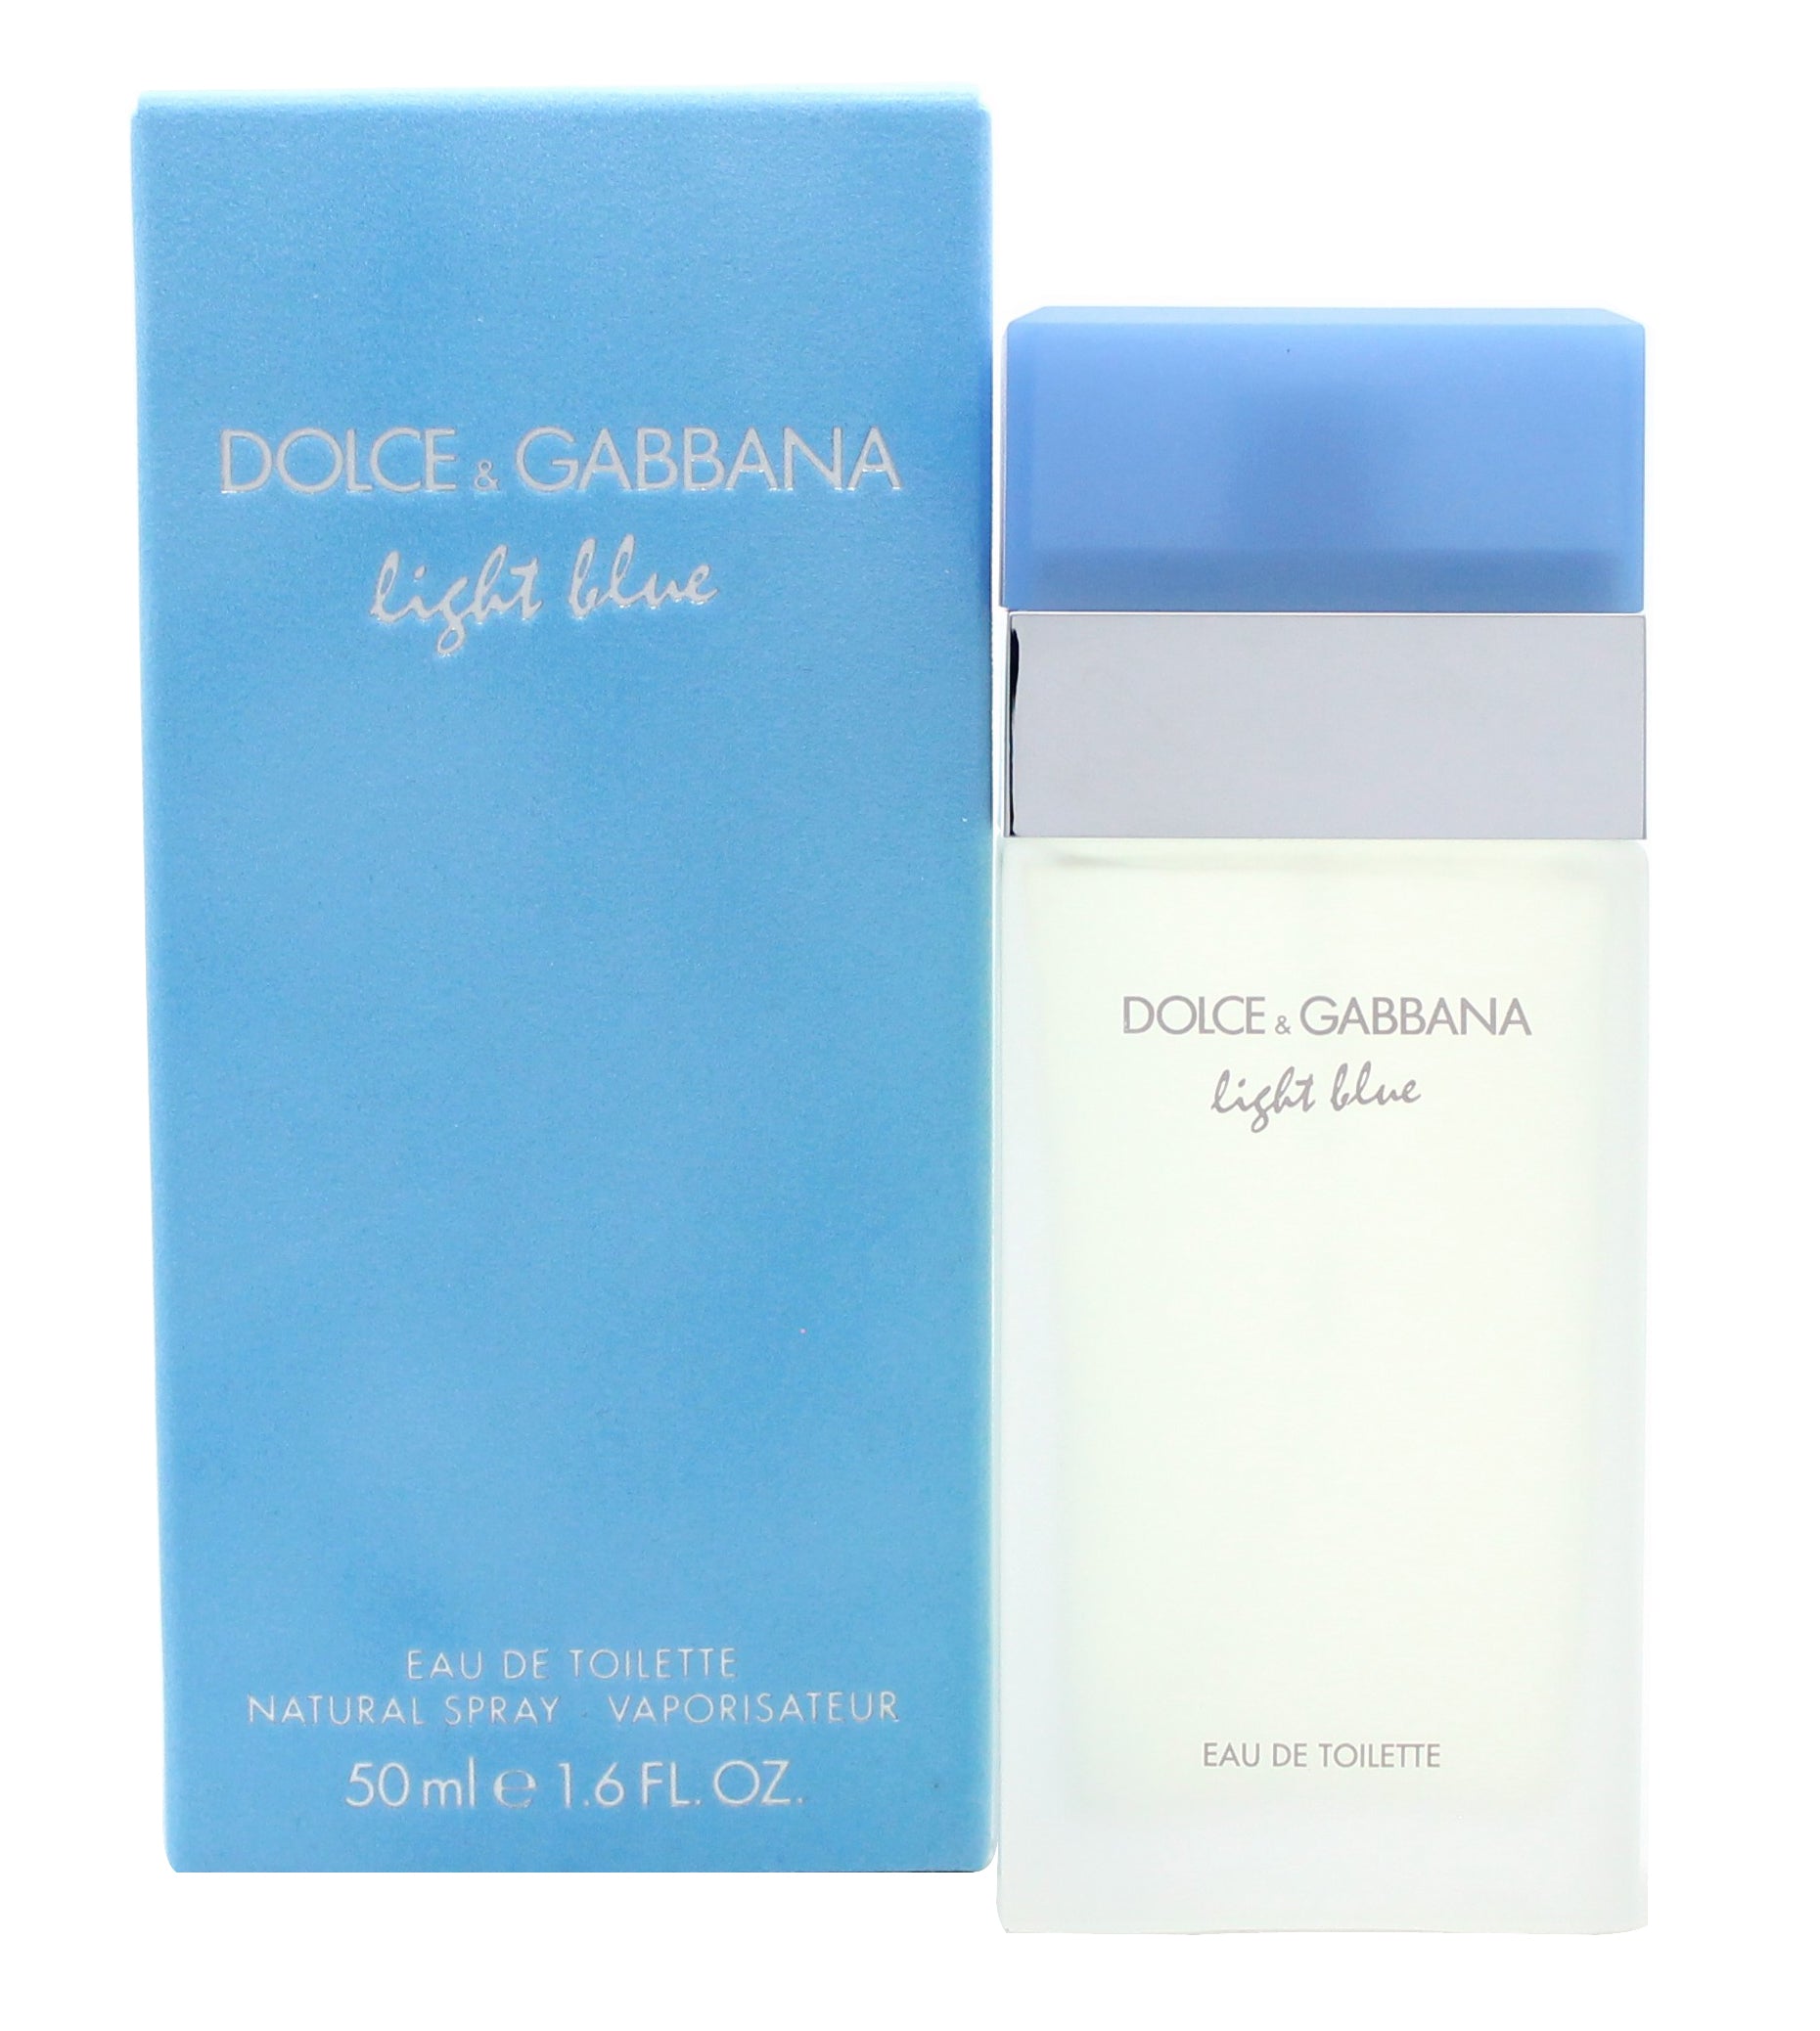 View Dolce Gabbana Light Blue Eau De Toilette 50ml Spray information